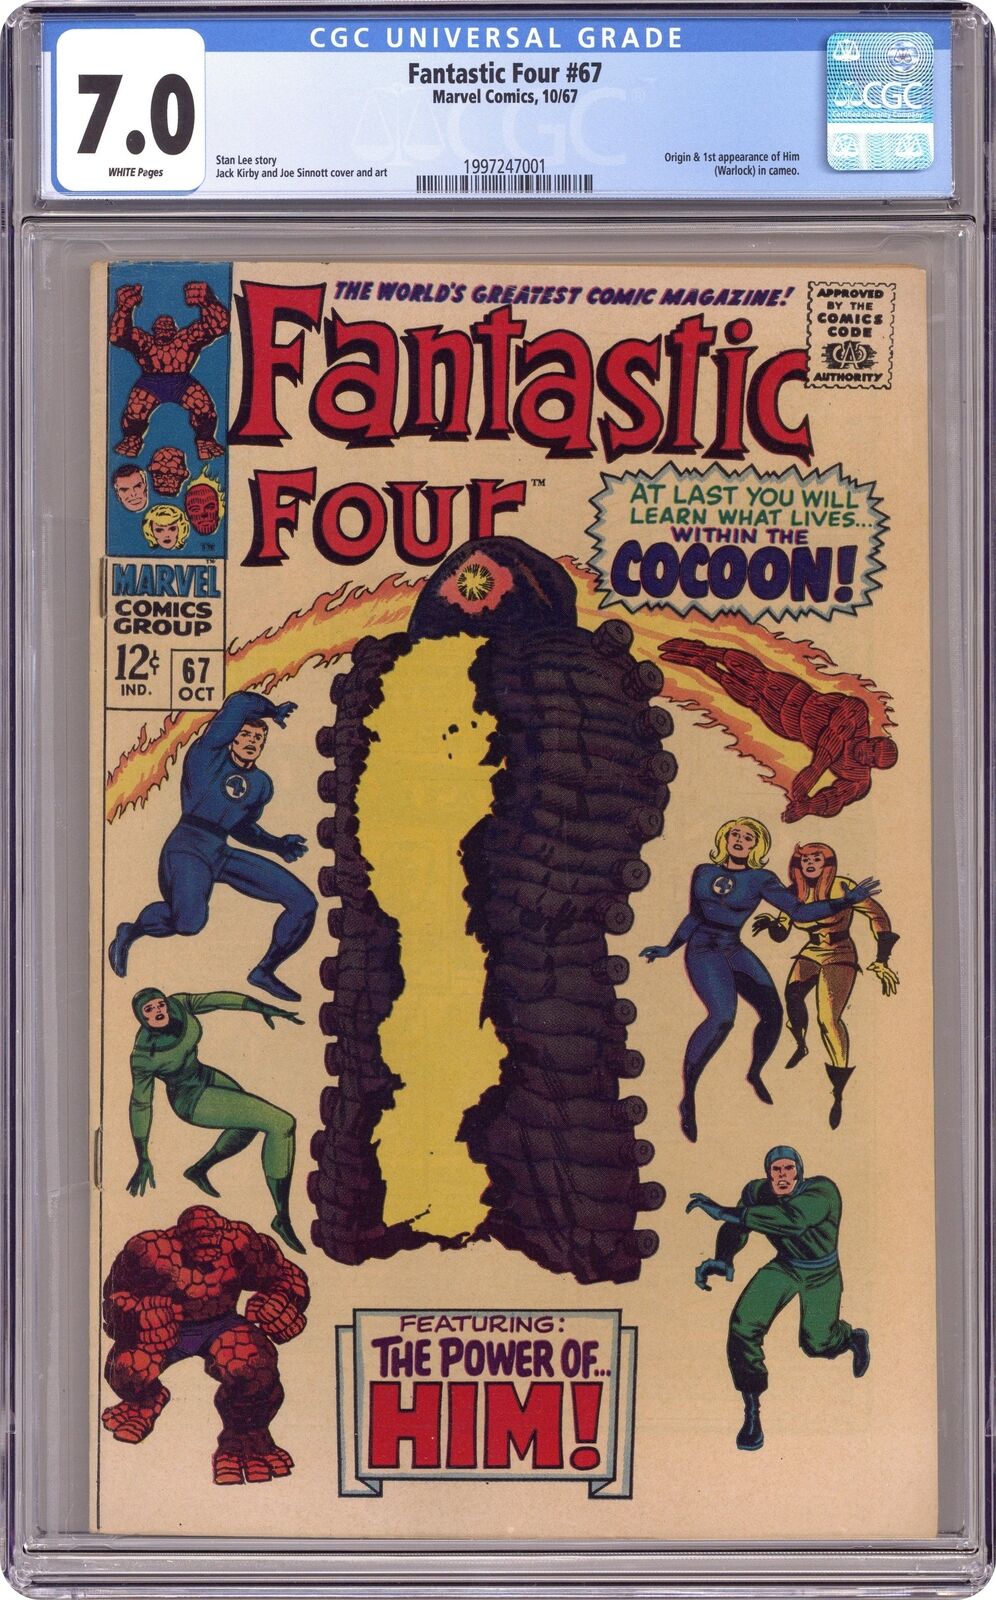 Fantastic Four #67 CGC 7.0 1967 1997247001 1st app. Him (Warlock)